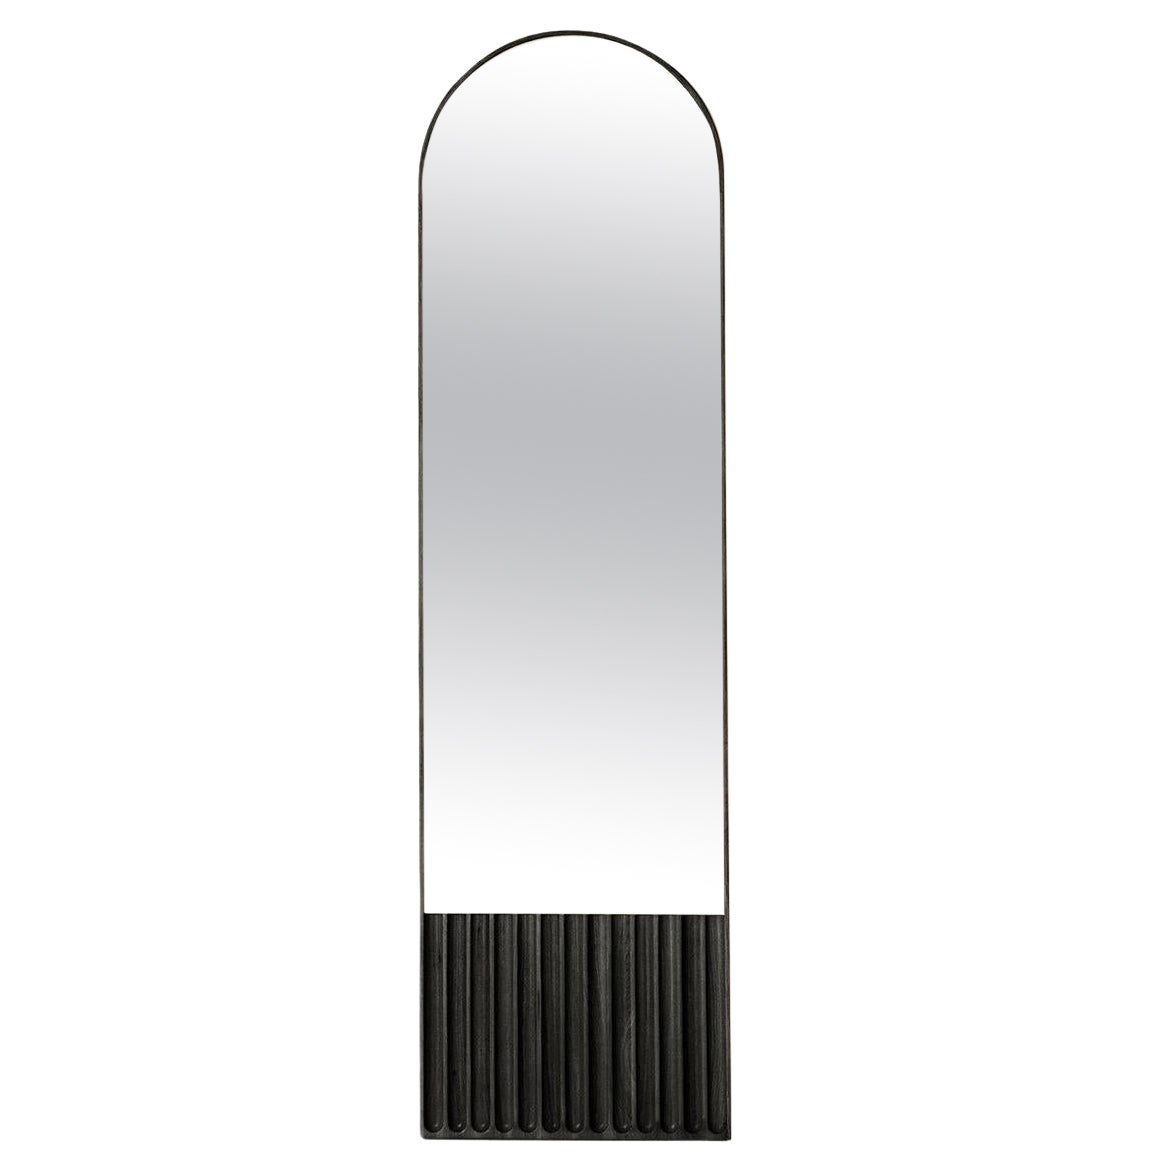 Miroir ovale Tutto Sesto en bois massif, finition en frêne noir, contemporain